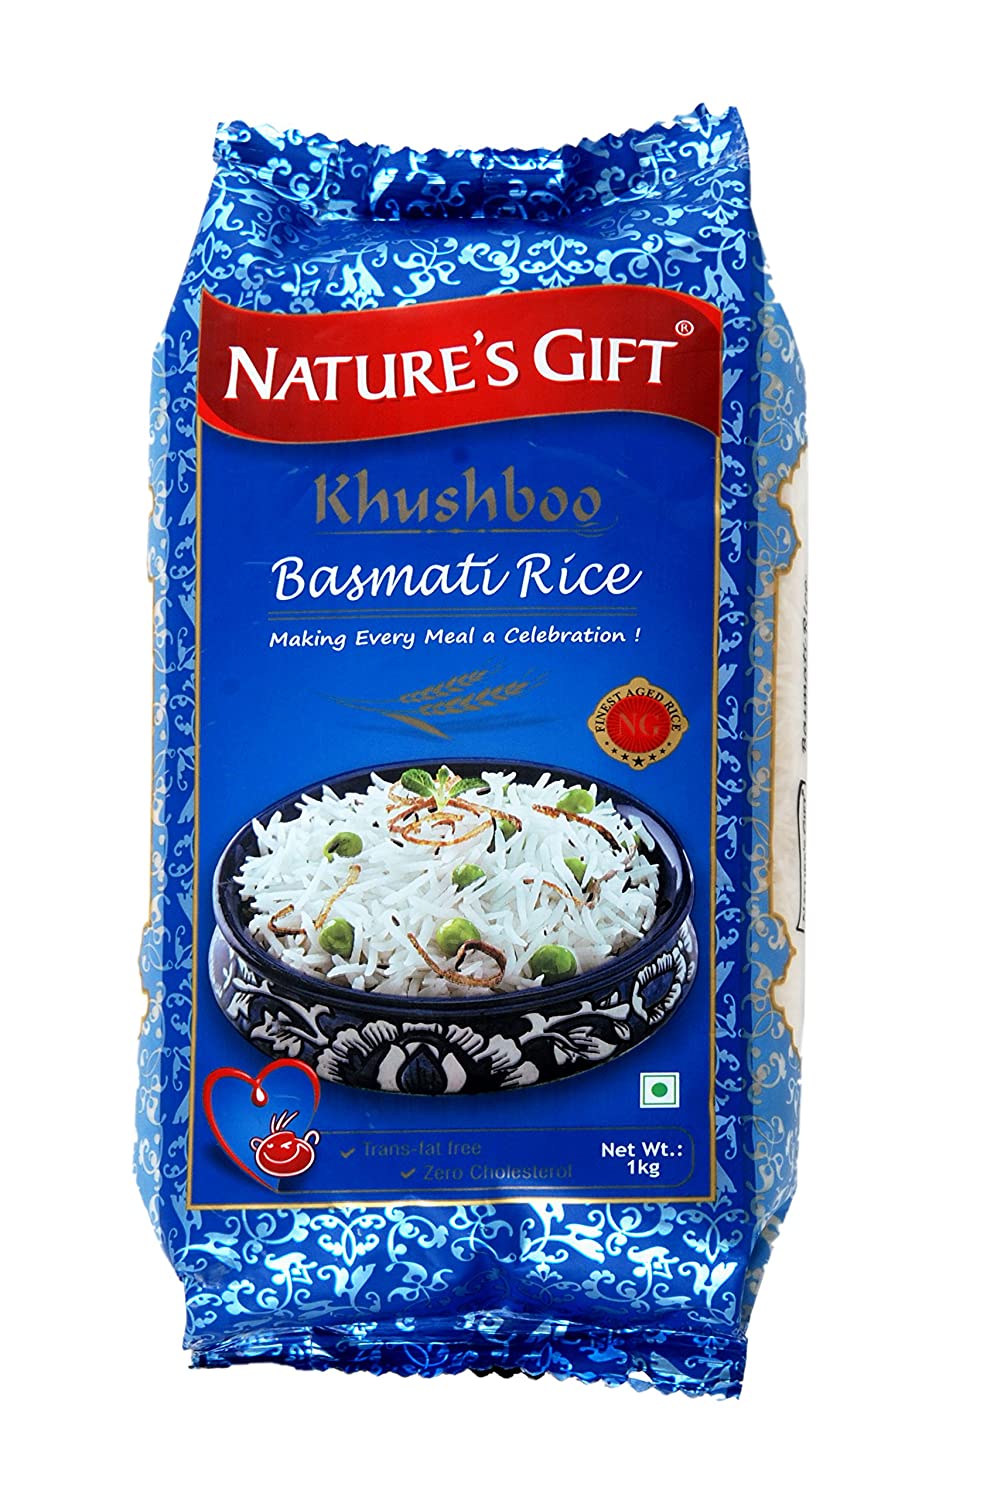 Nature's Gift, Khusboo Long grain Basmati rice 1 Kg from India